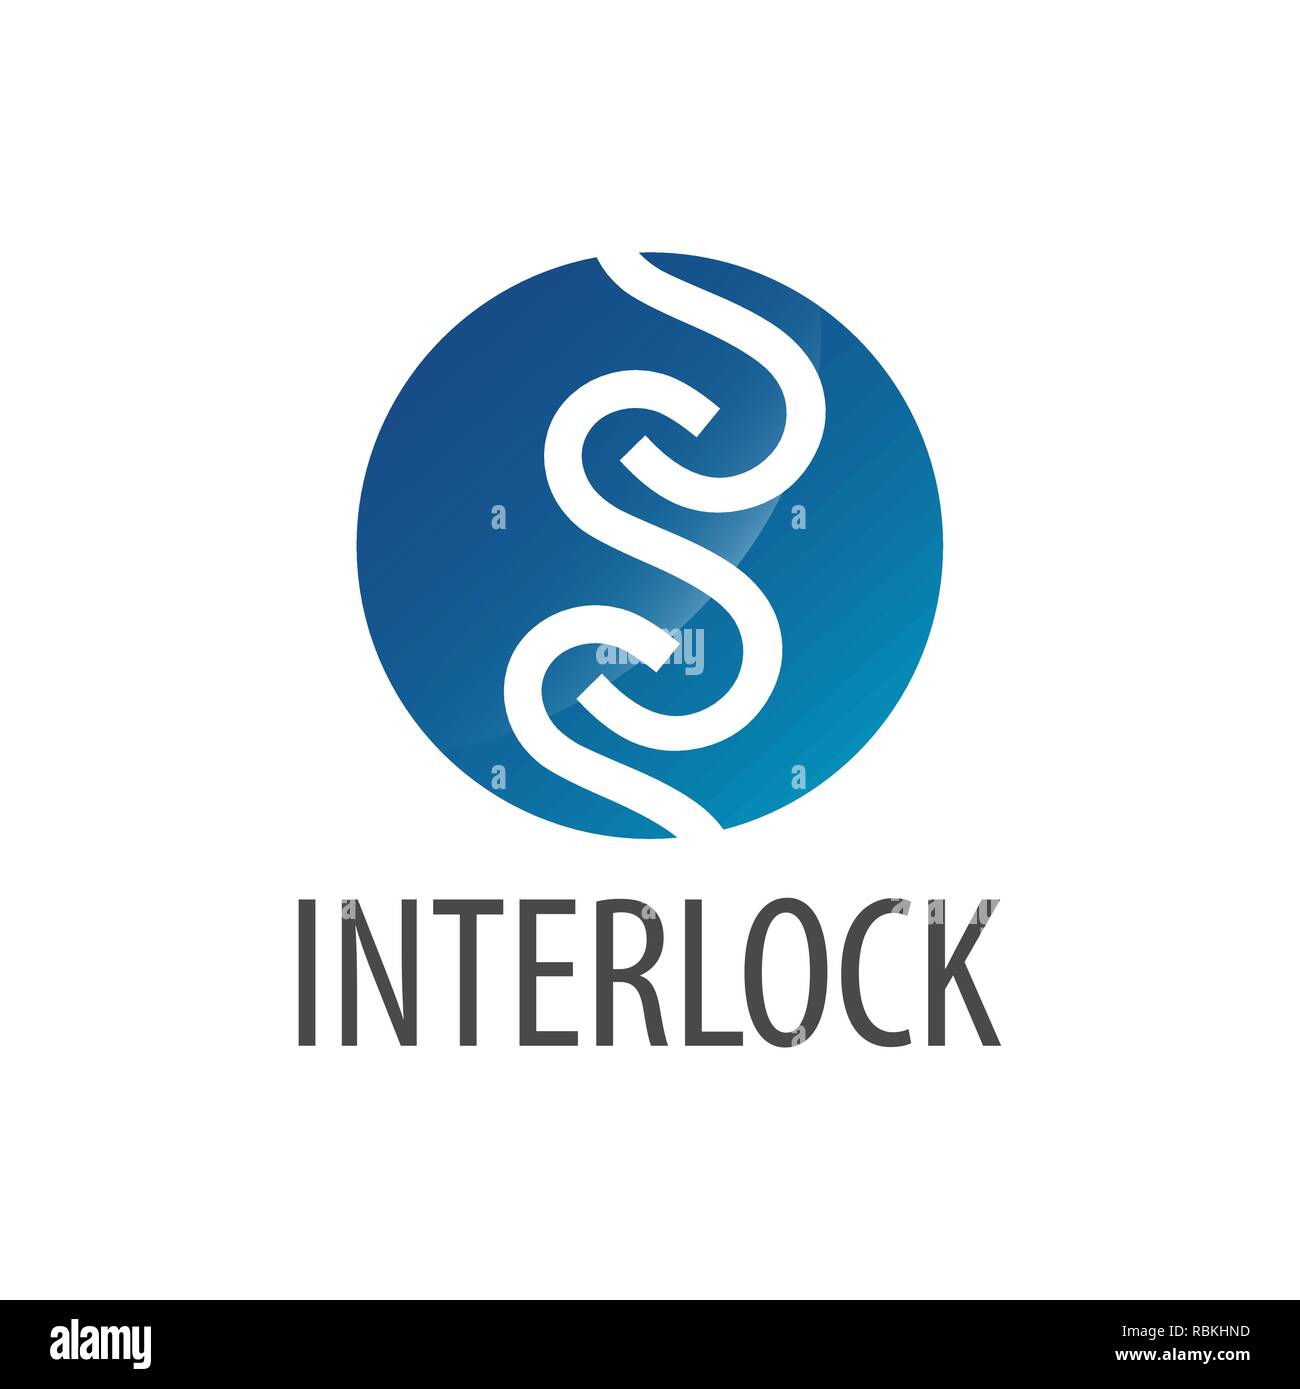 Interlock. Blue circle initial letter S logo concept design template idea Stock Vector